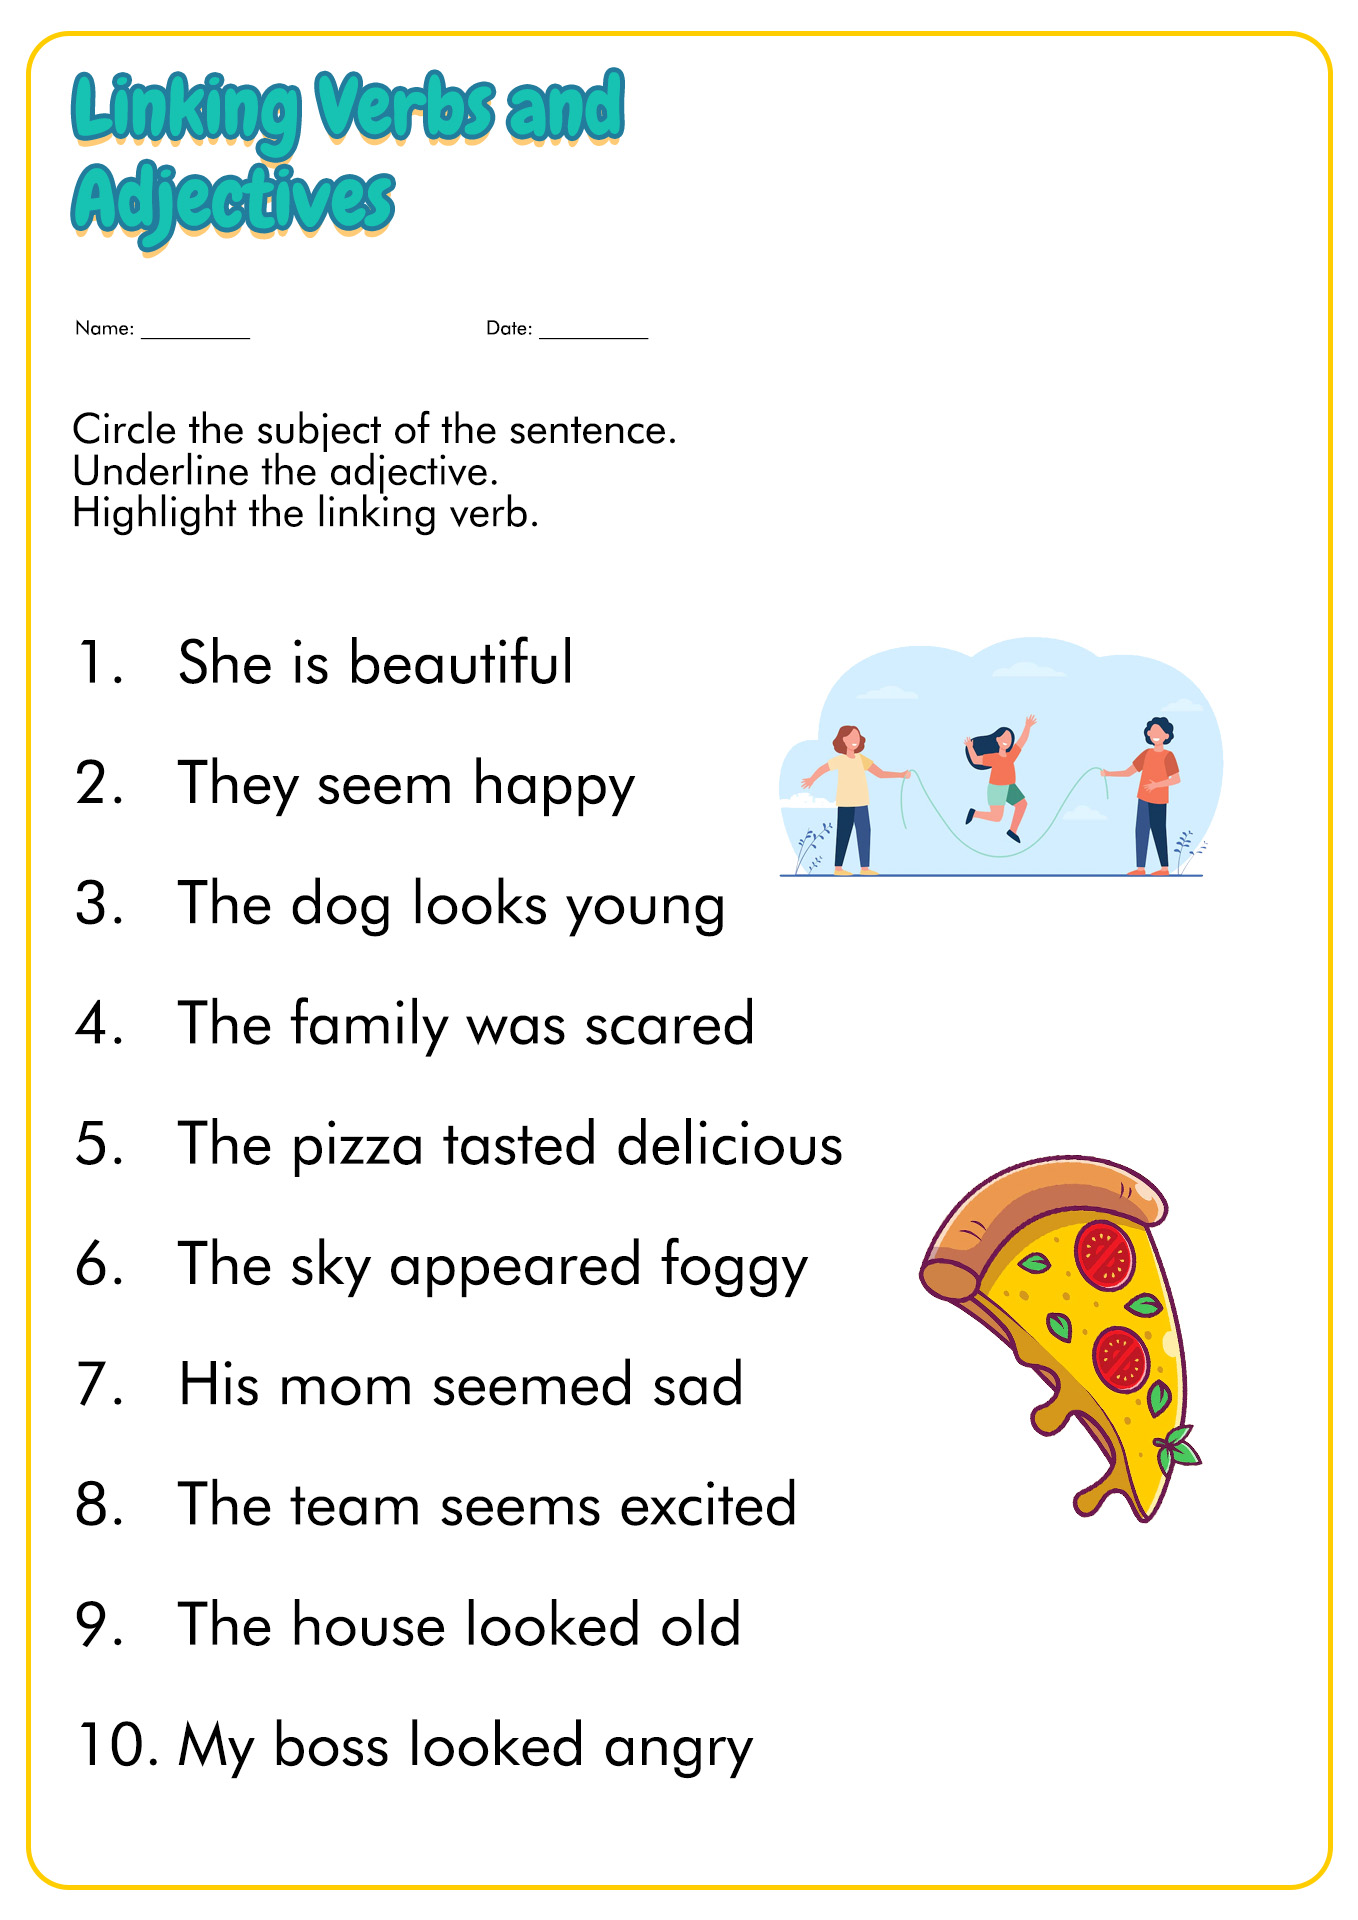 Identifying Adjectives Worksheet 4th Grade Image